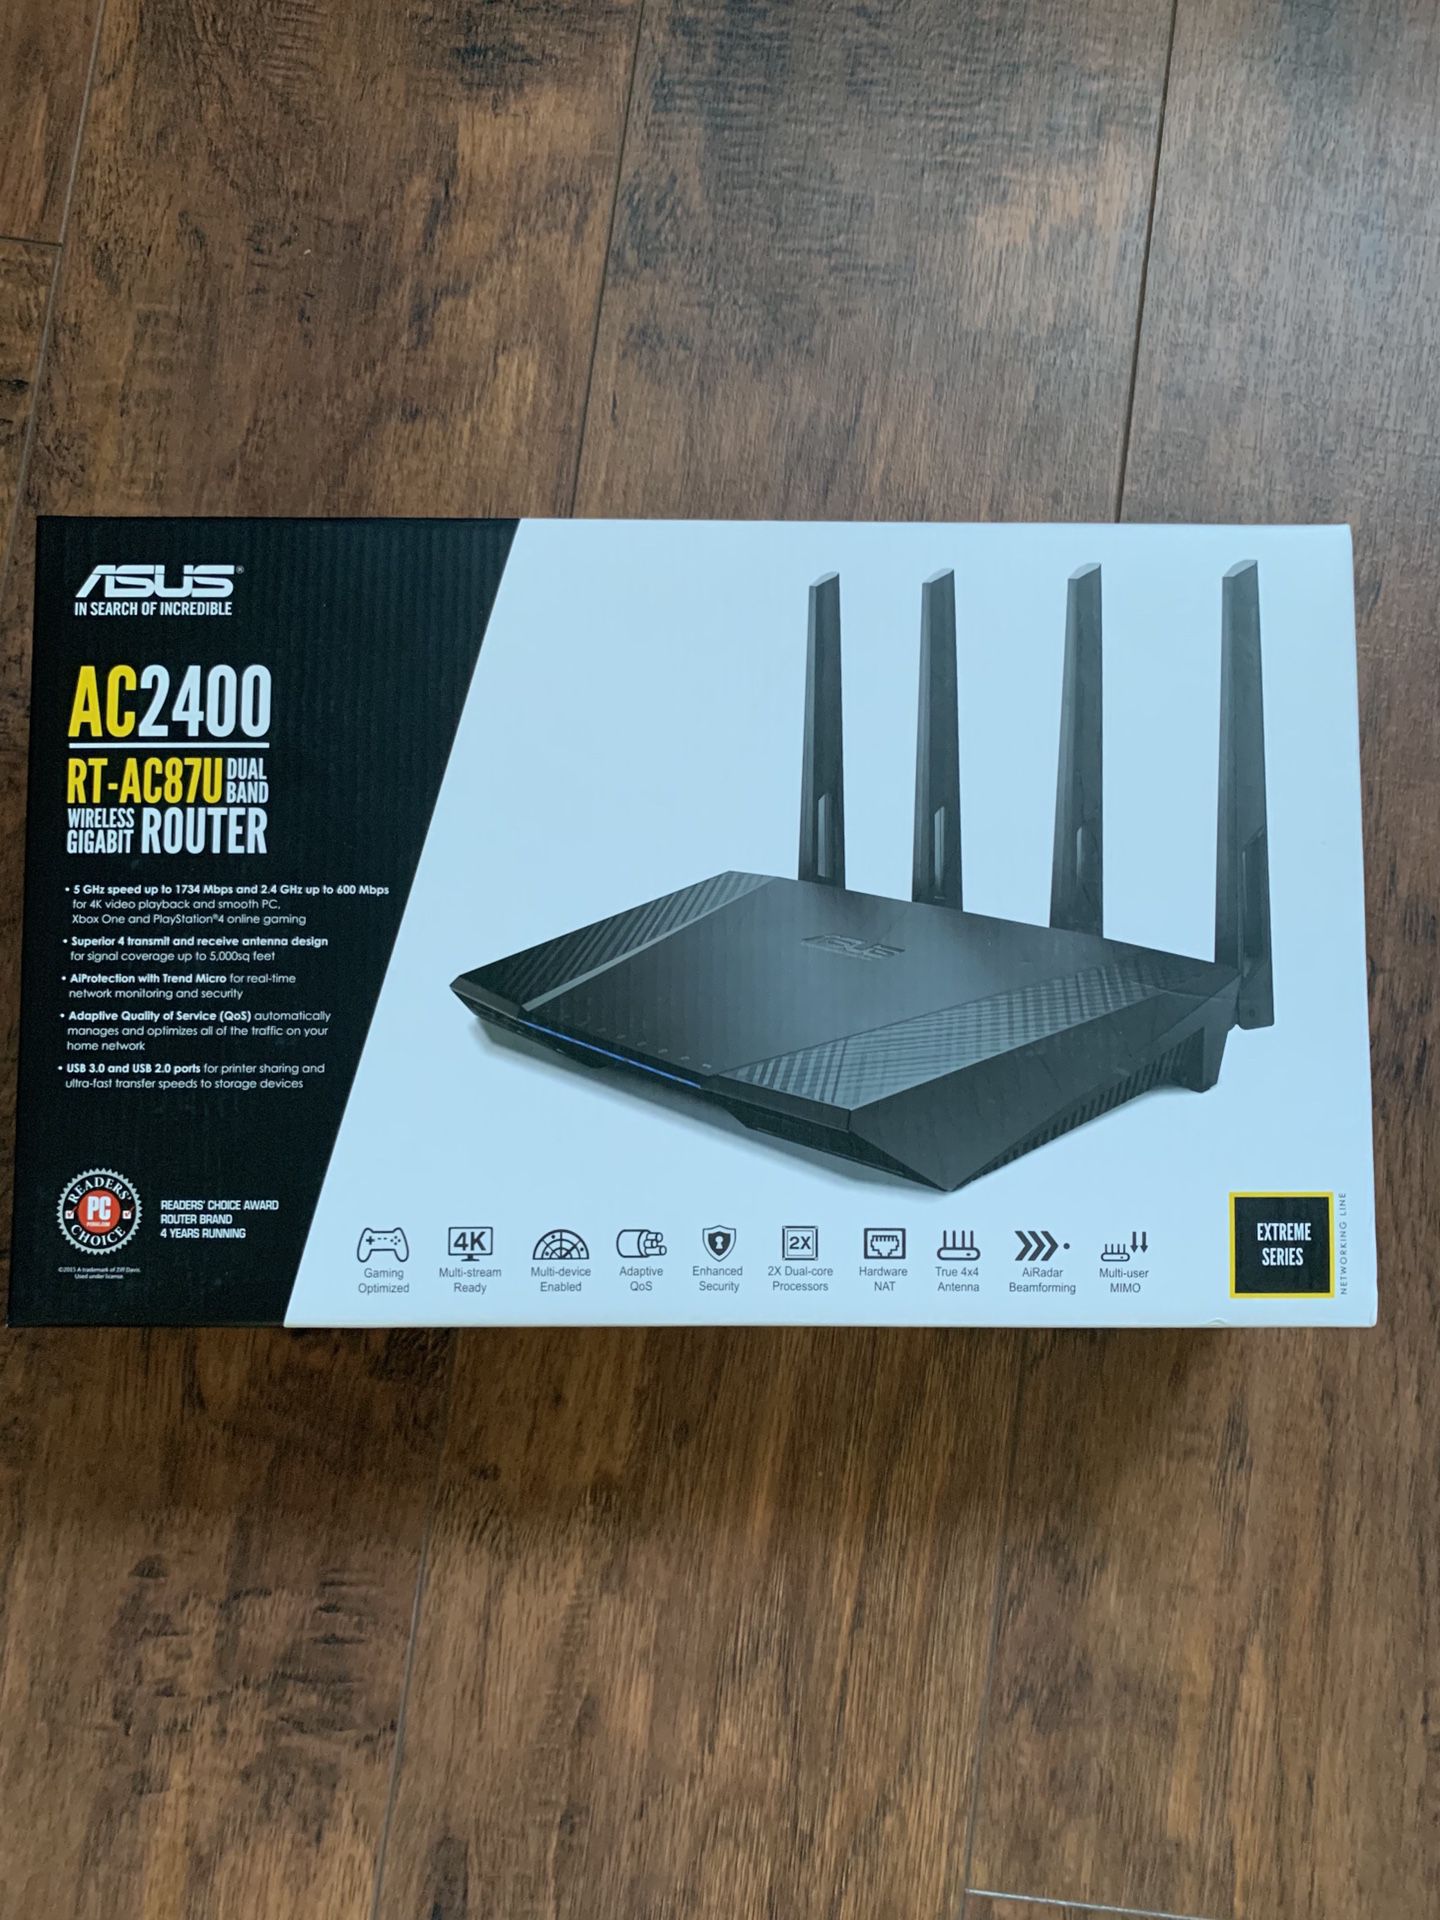 Asus RT-AC87U Dual Band Gaming Wireless Gigabit Router